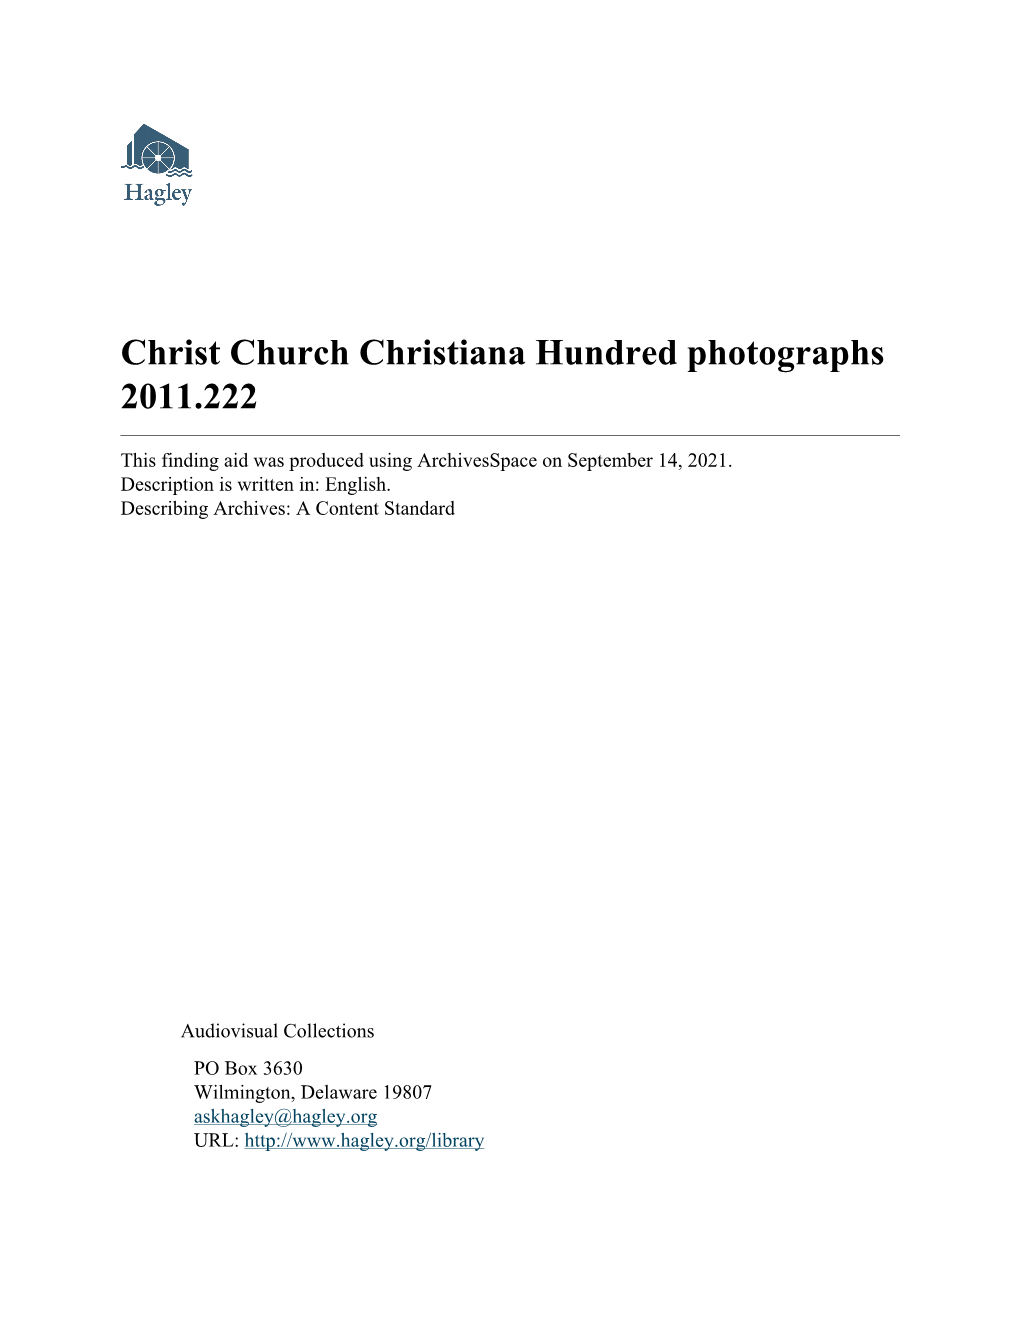 Christ Church Christiana Hundred Photographs 2011.222